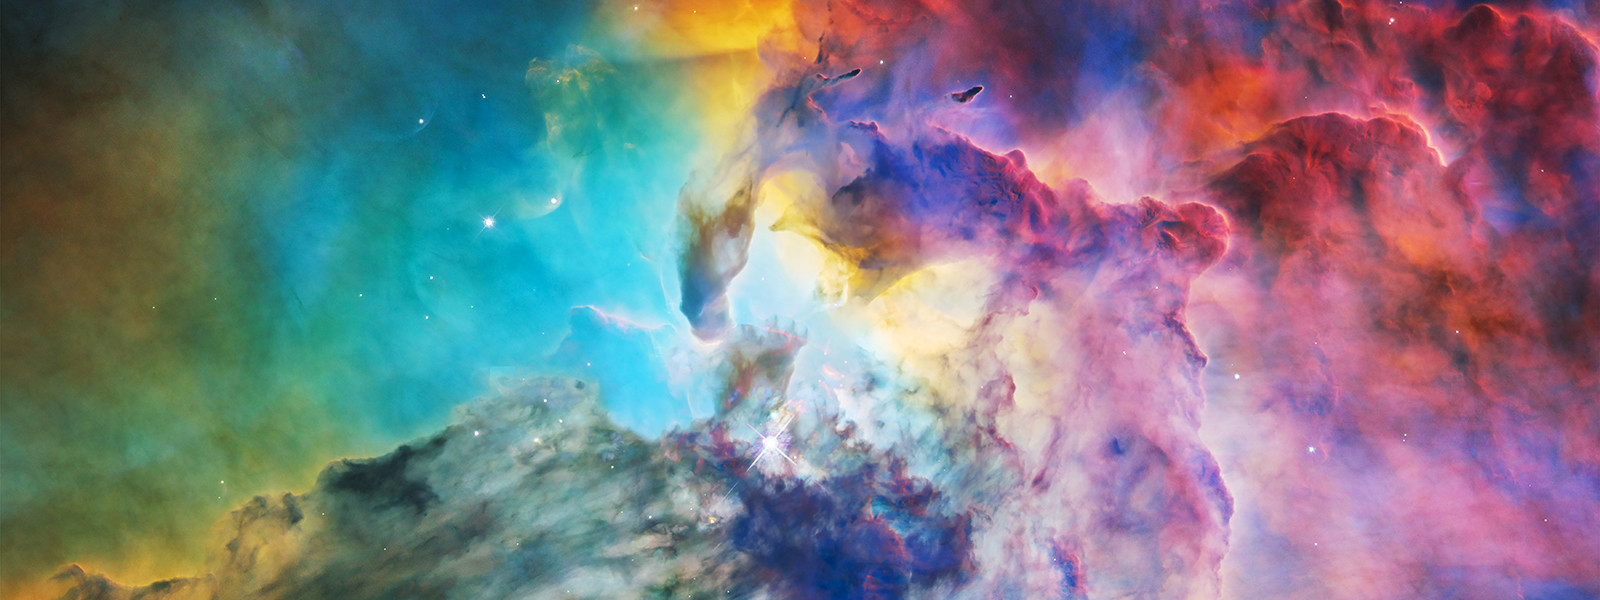 The Lagoon Nebula in bright colors